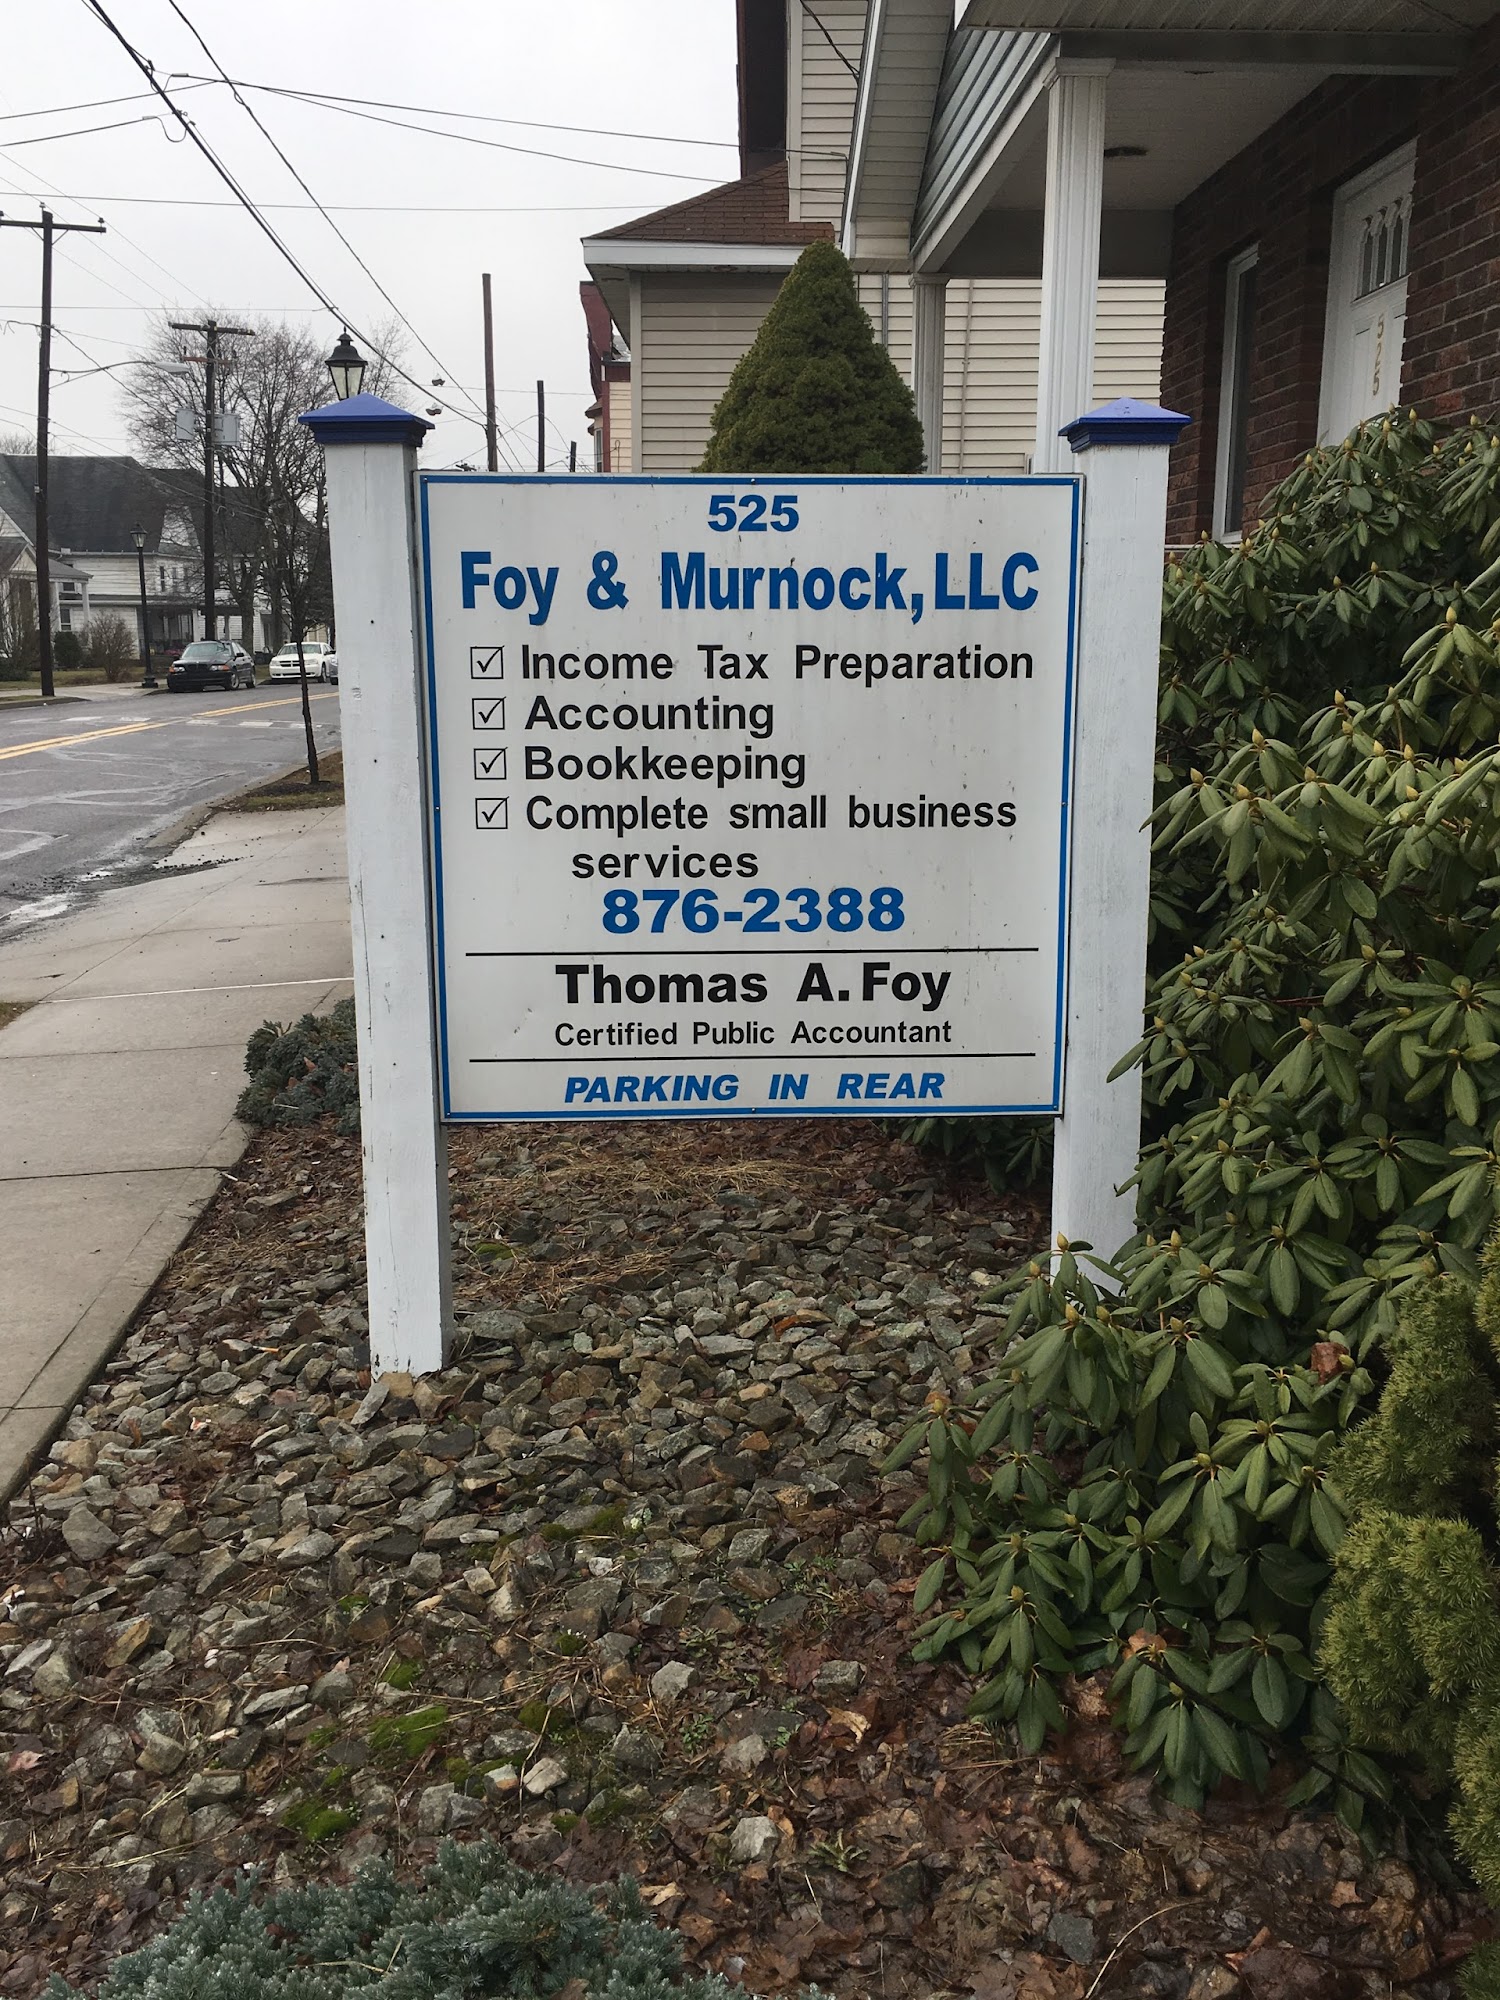 Foy & Murnock, LLC 525 Washington Ave, Jermyn Pennsylvania 18433